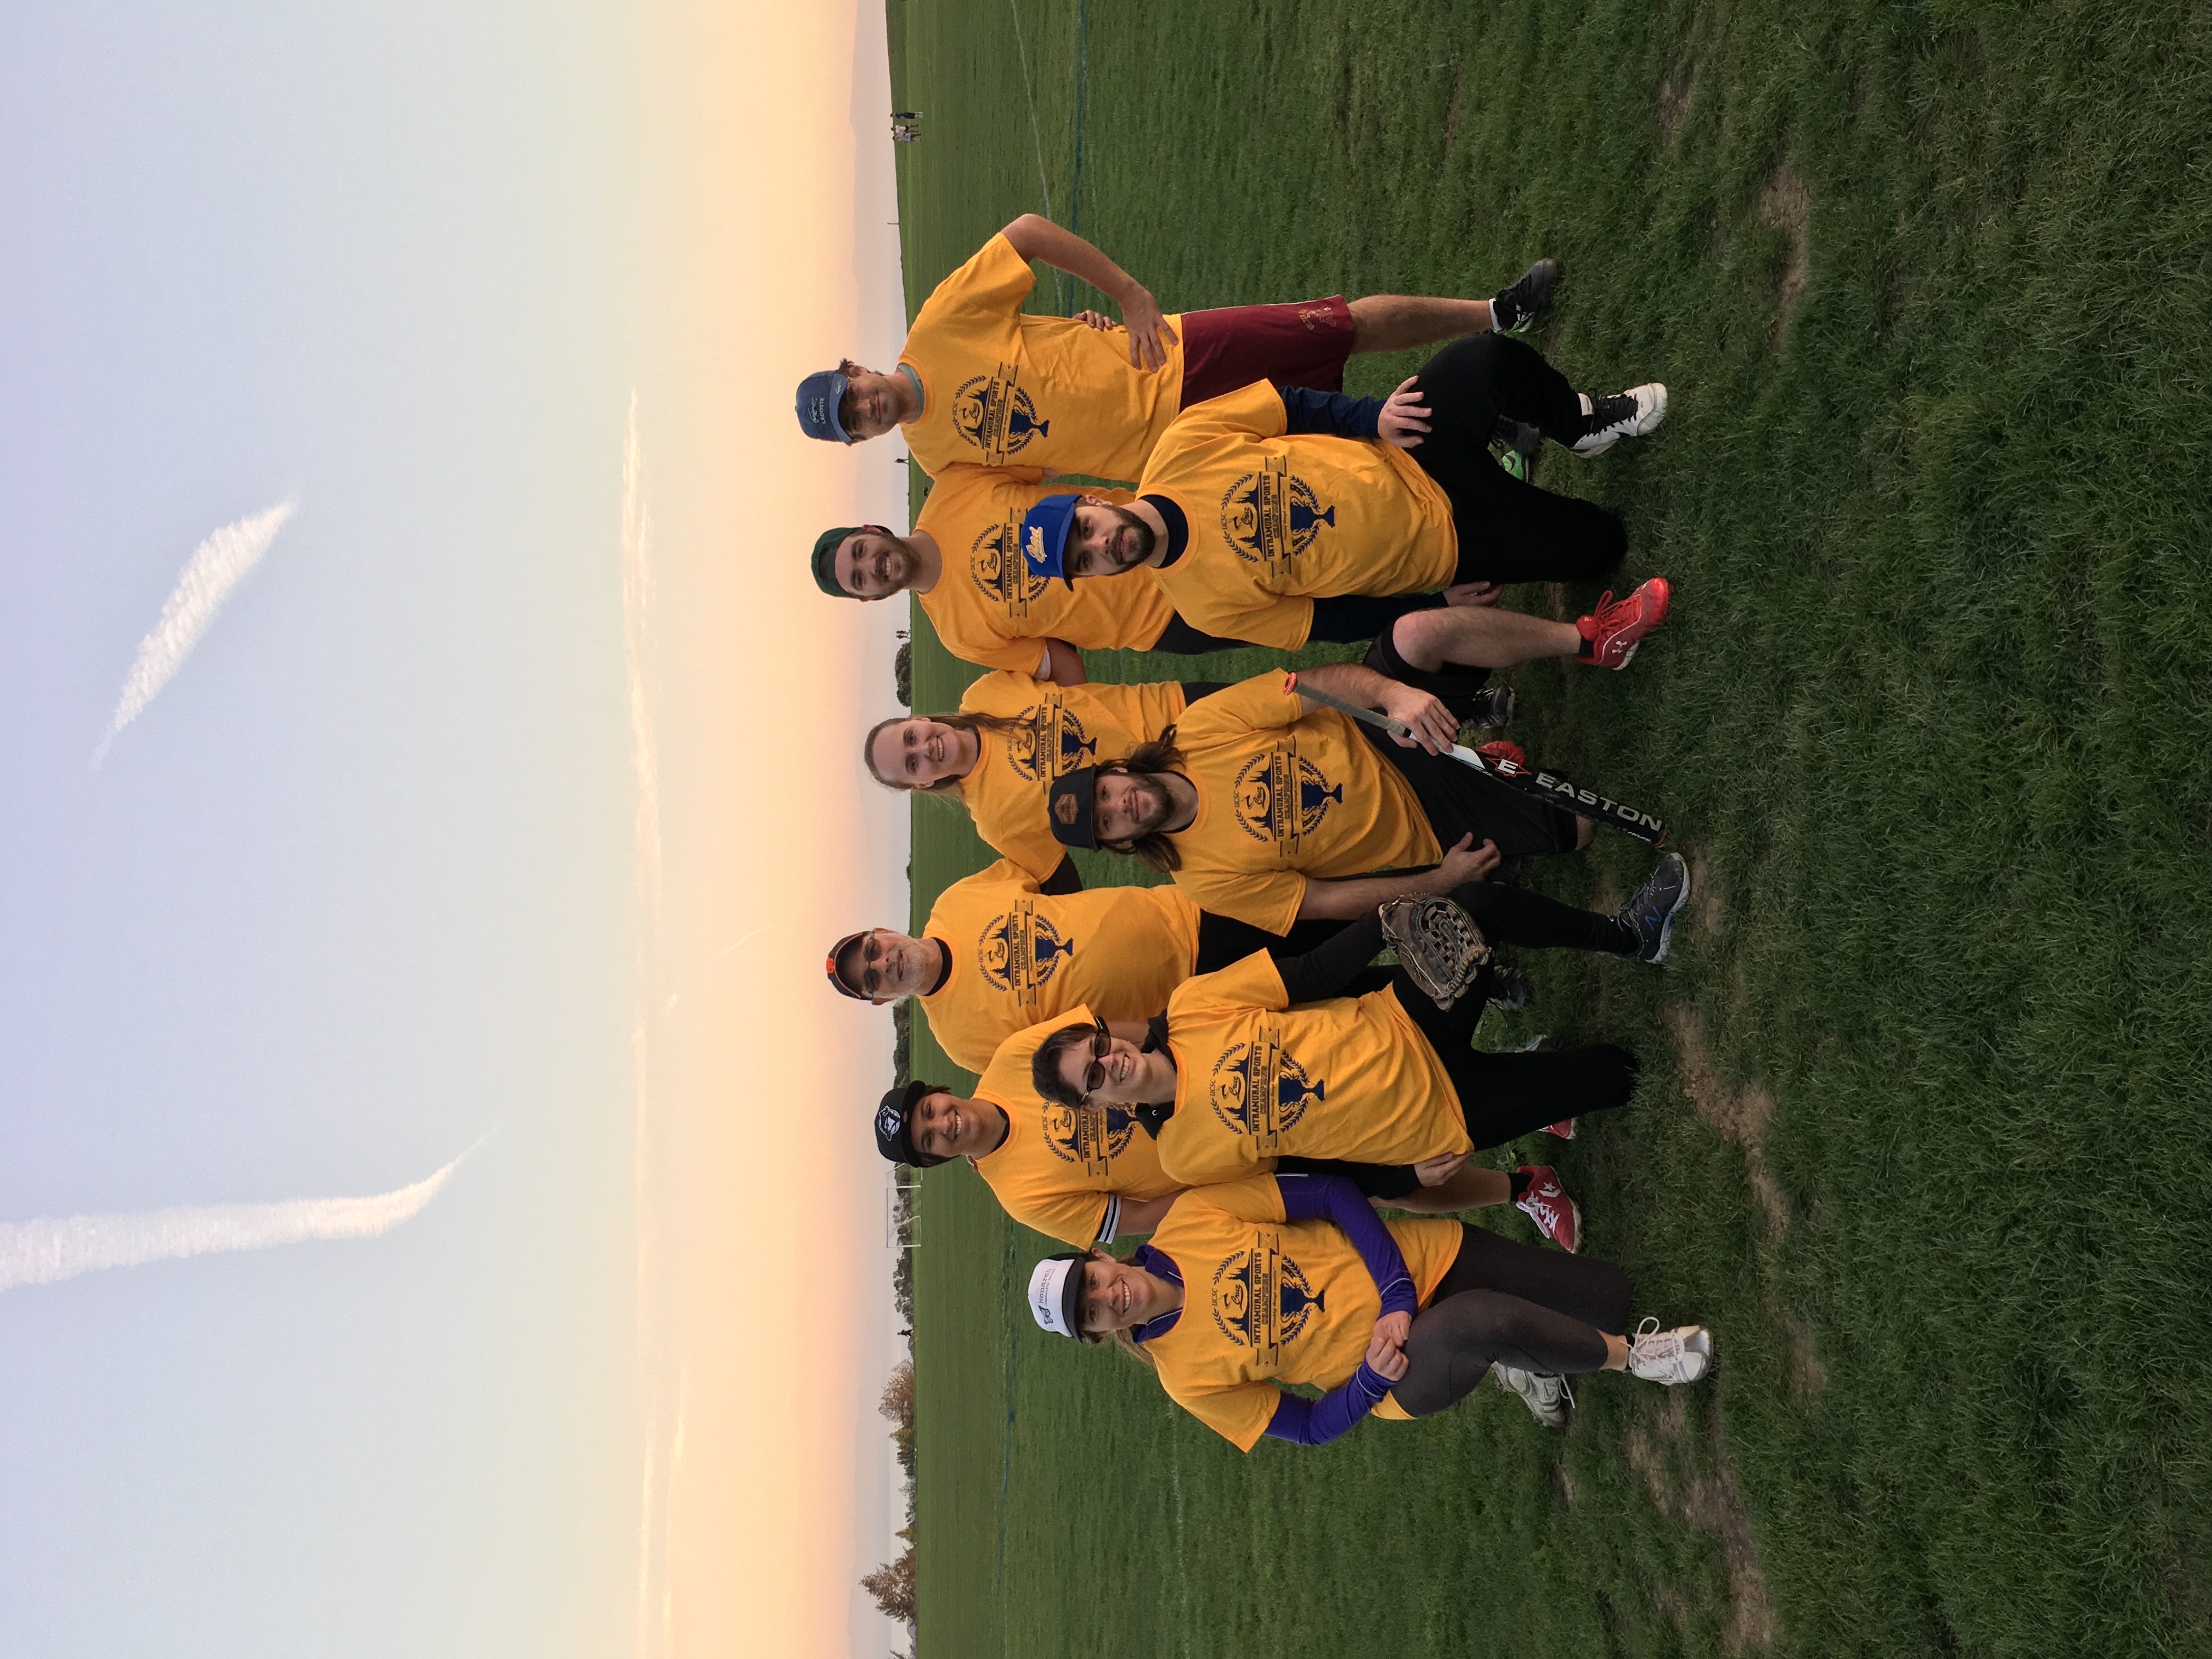 Fall 2016 Coed Softball Team